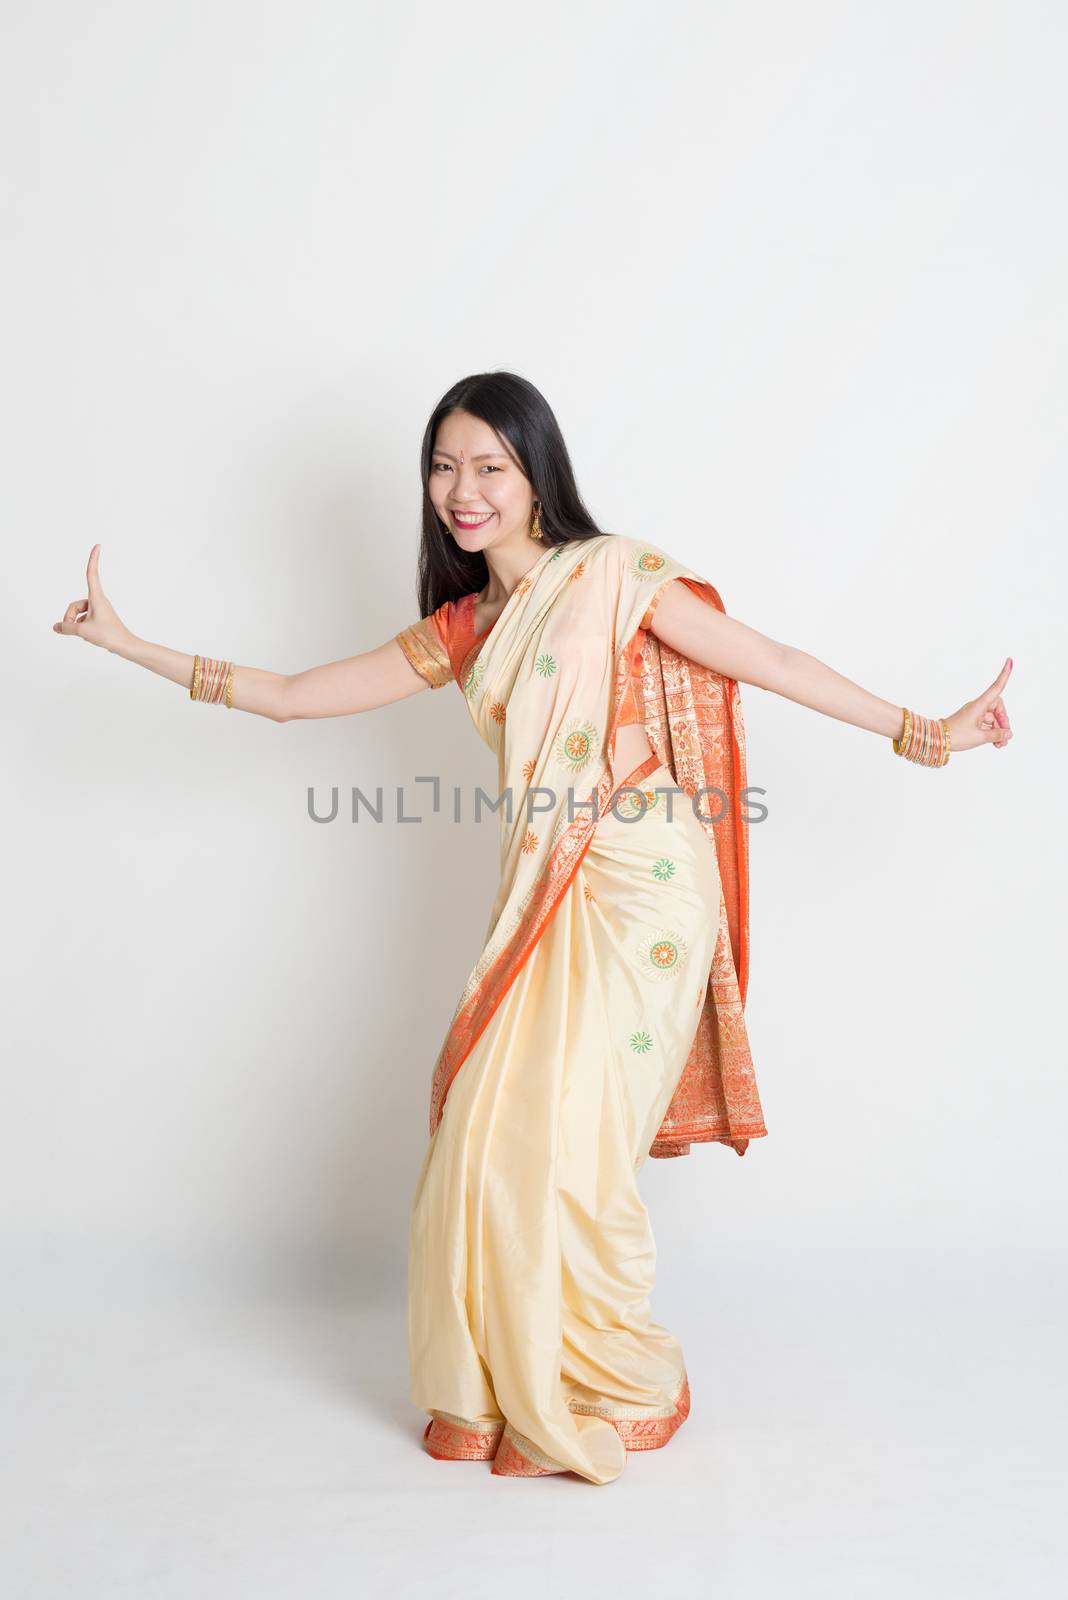 Female in Indian sari dress dancing by szefei